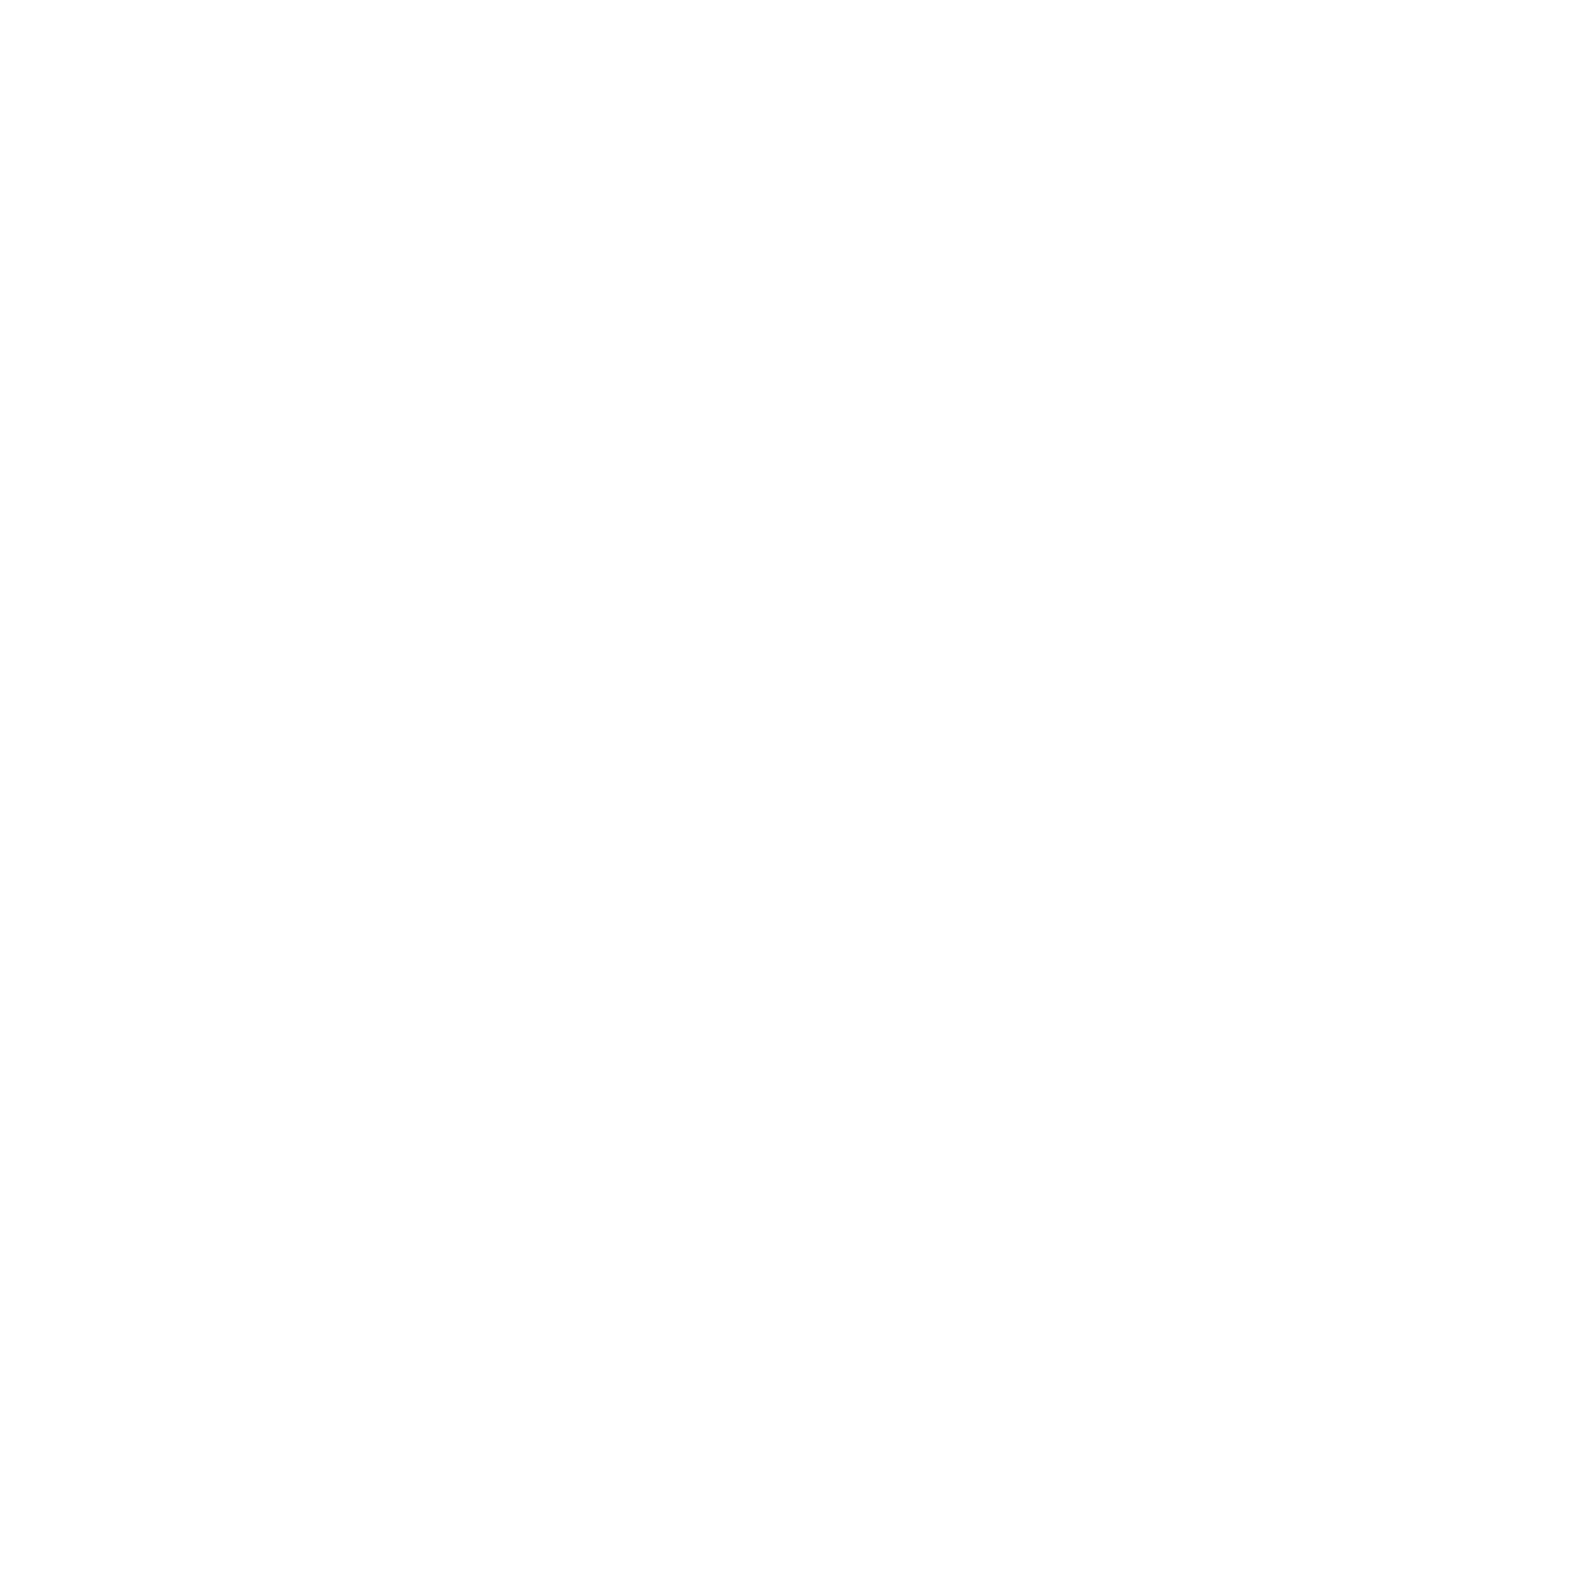 Getlink logo pour fonds sombres (PNG transparent)